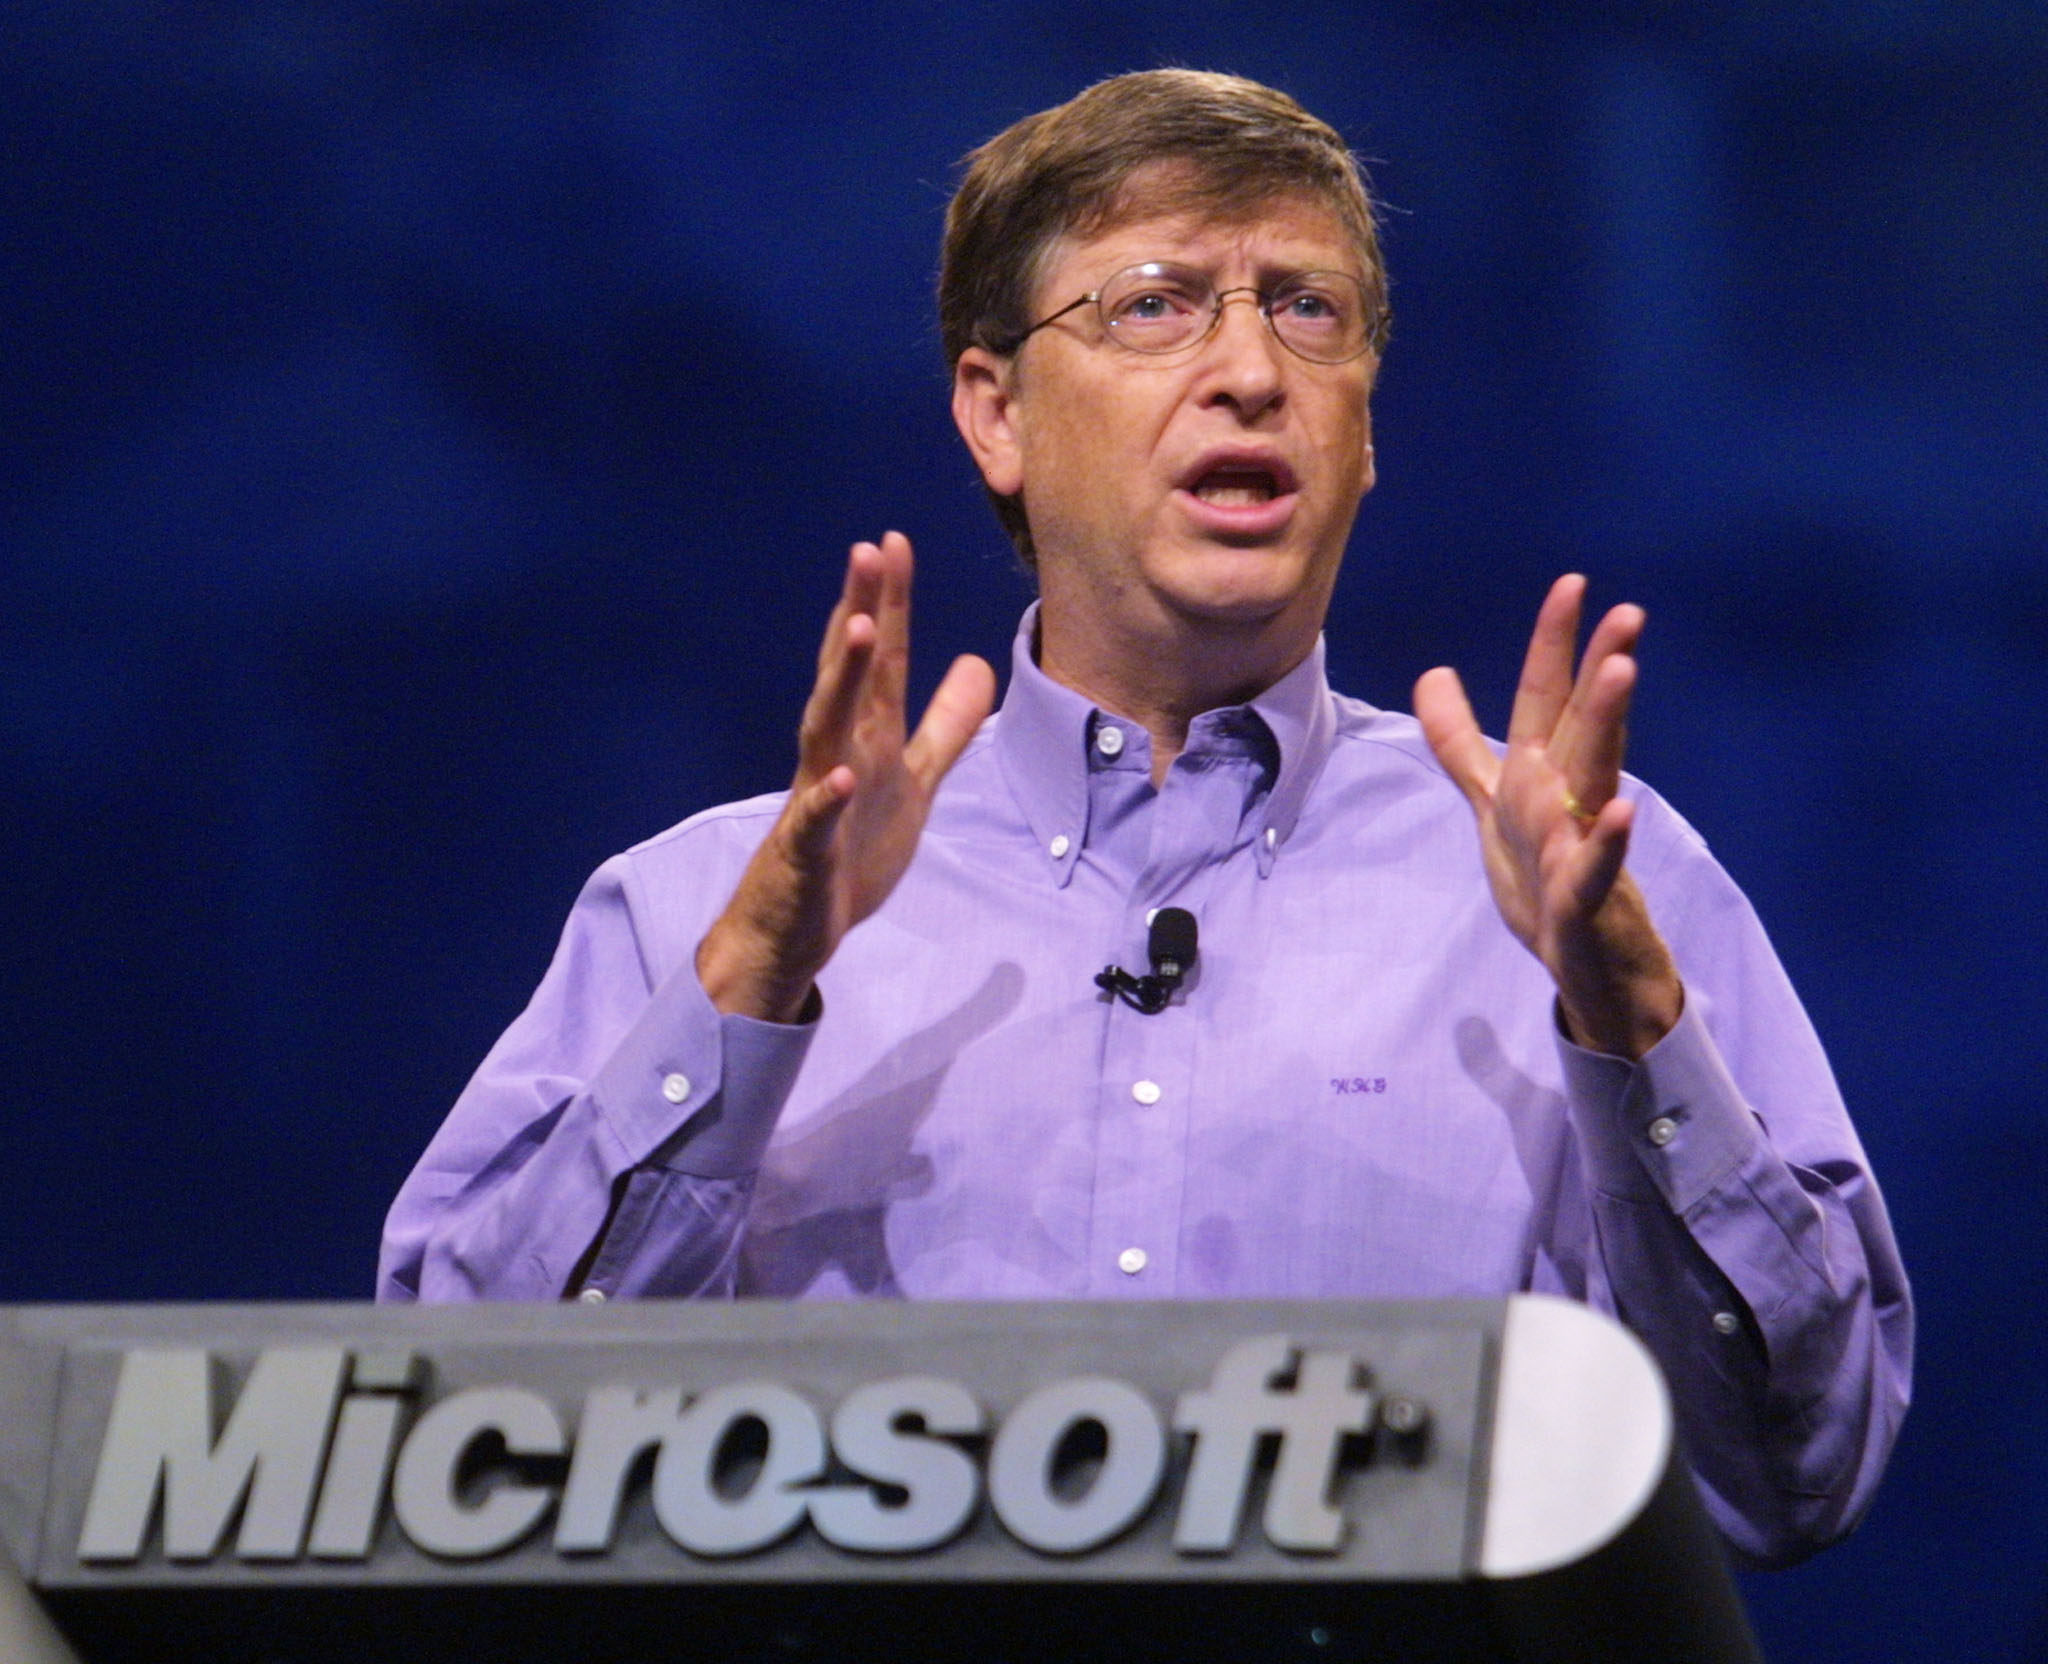 Bill & Melinda Gates Foundation Donates $4.7M To Fund Technology For African Journalim